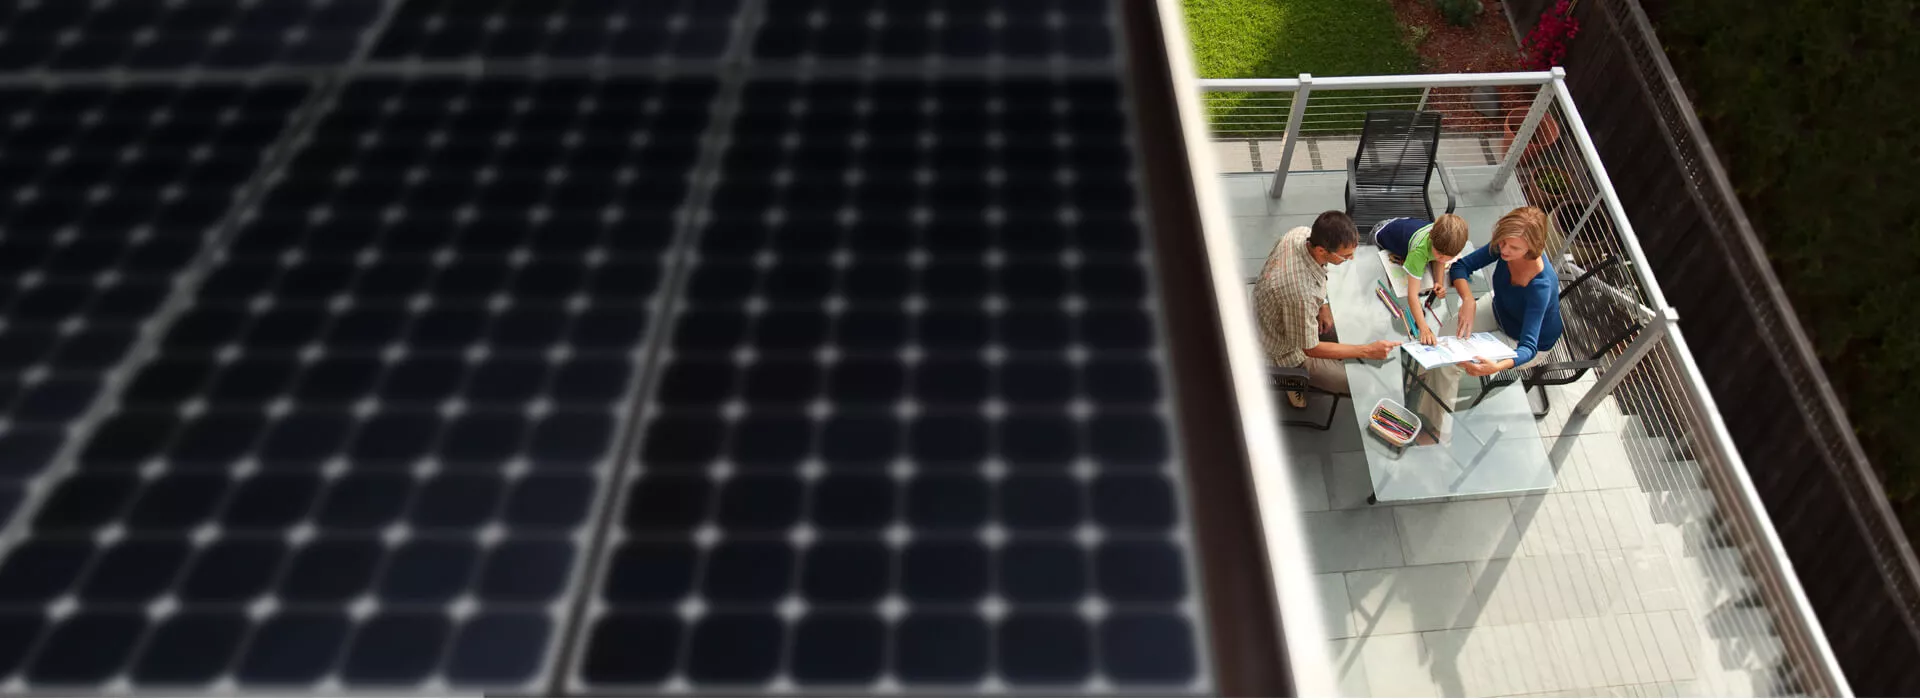 rooftop solar panels on an Italian home